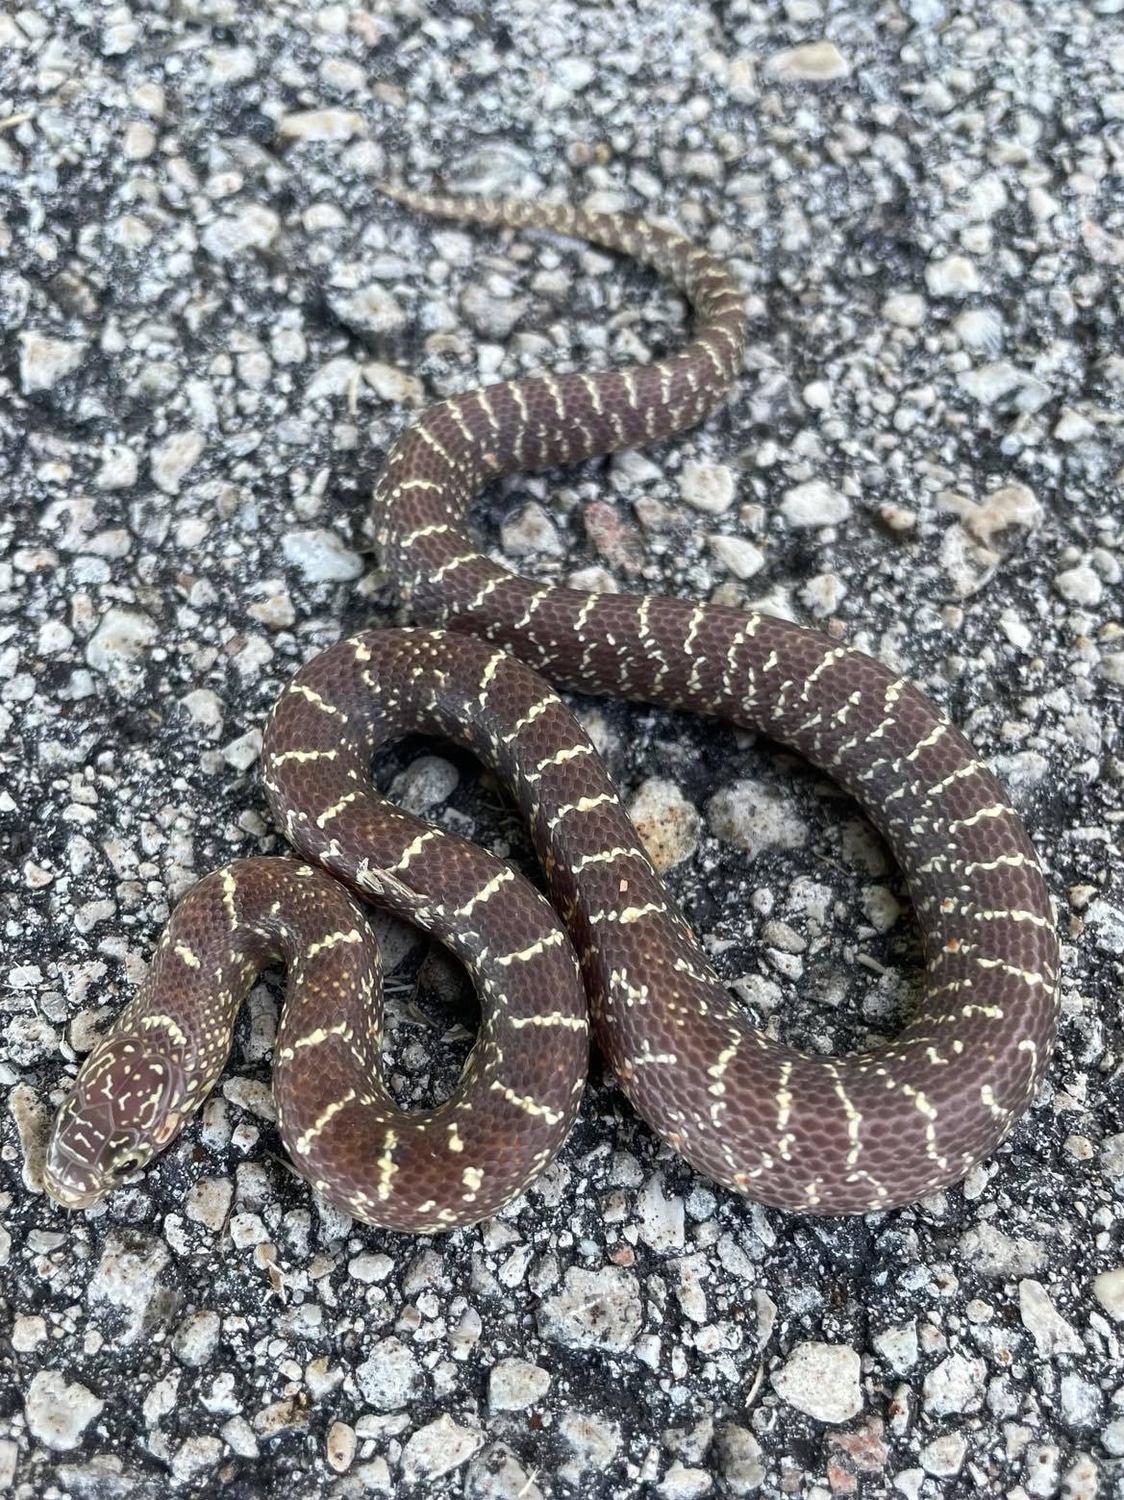 Peanut Florida Kingsnake by Snakes at Sunset